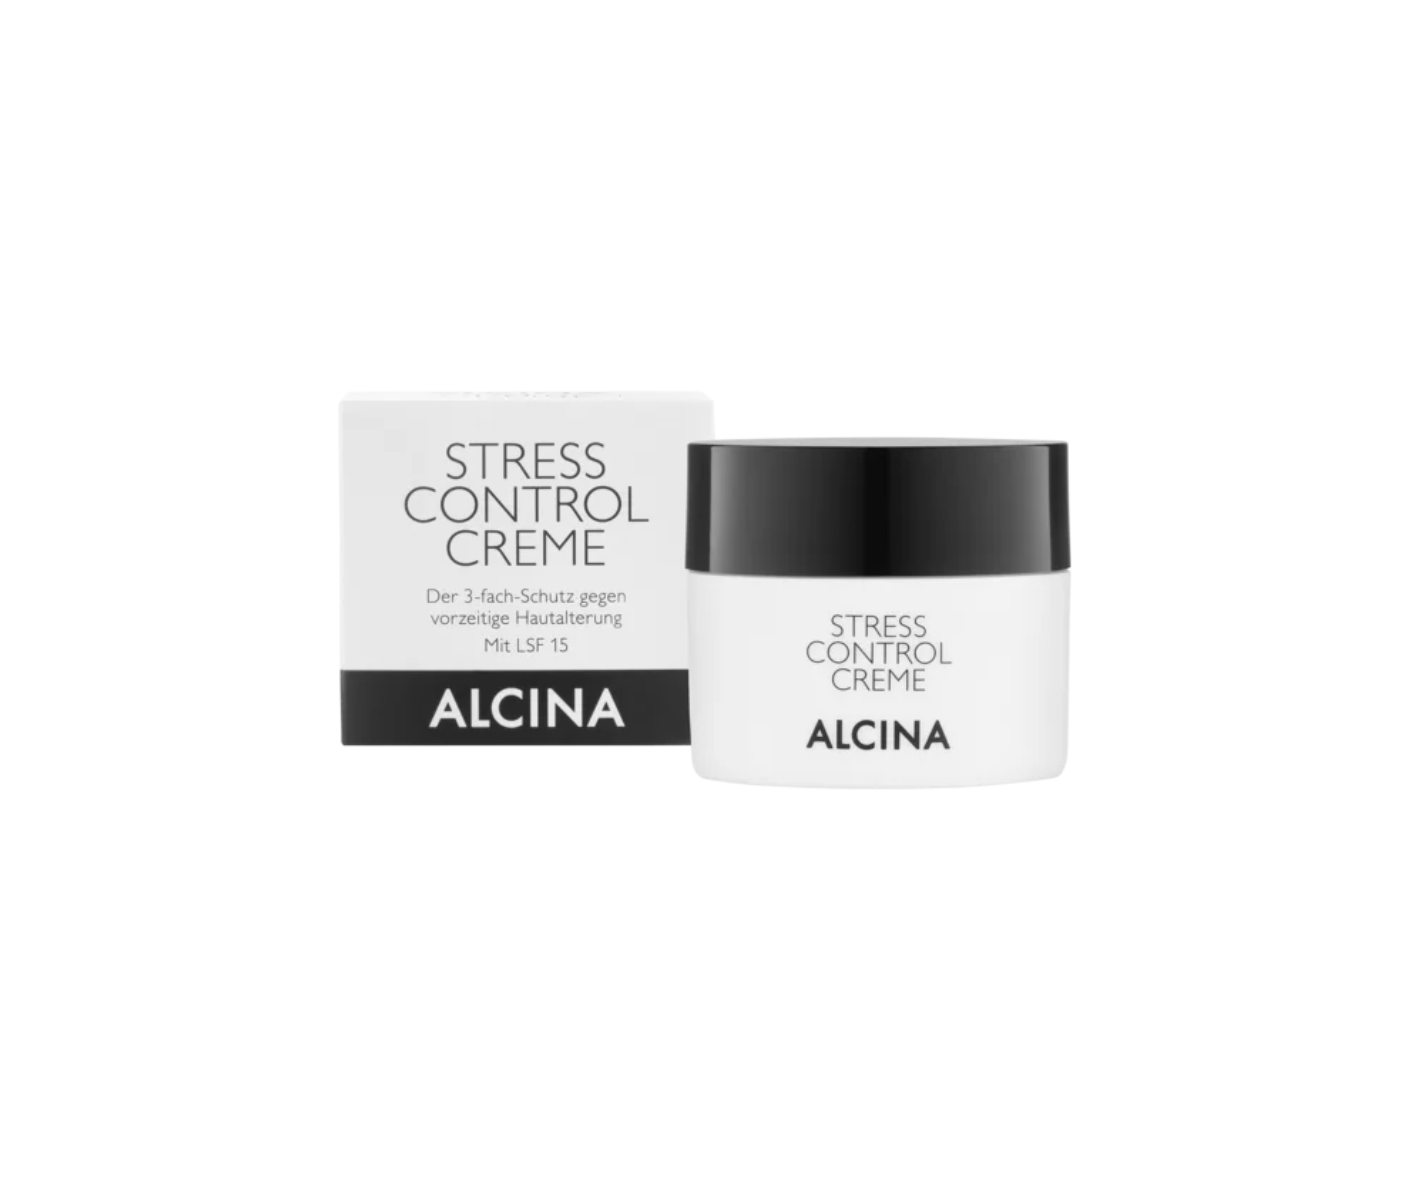 ALCINA - Stress control creme